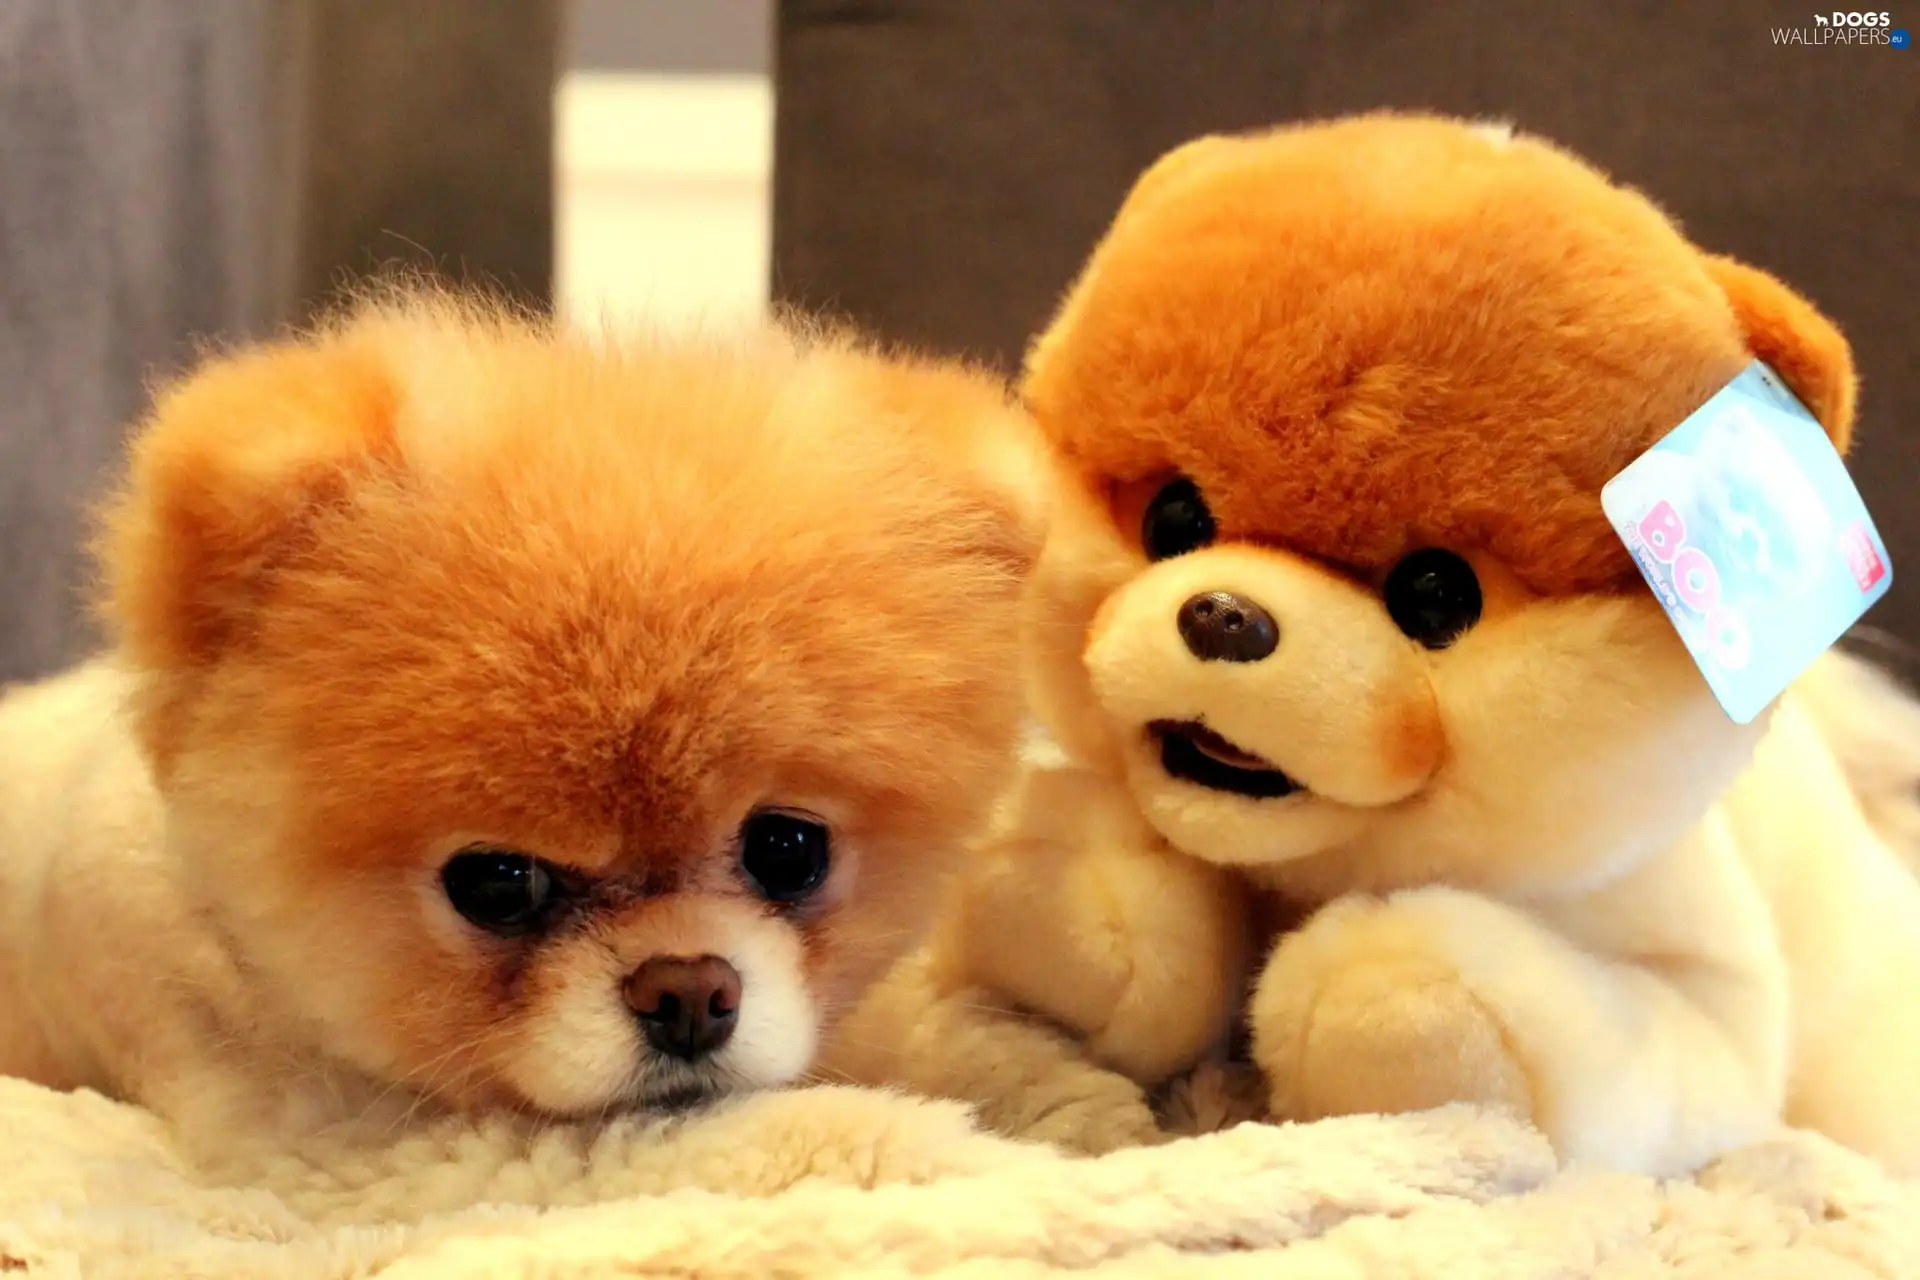 Pomeranian, plush toy, dog